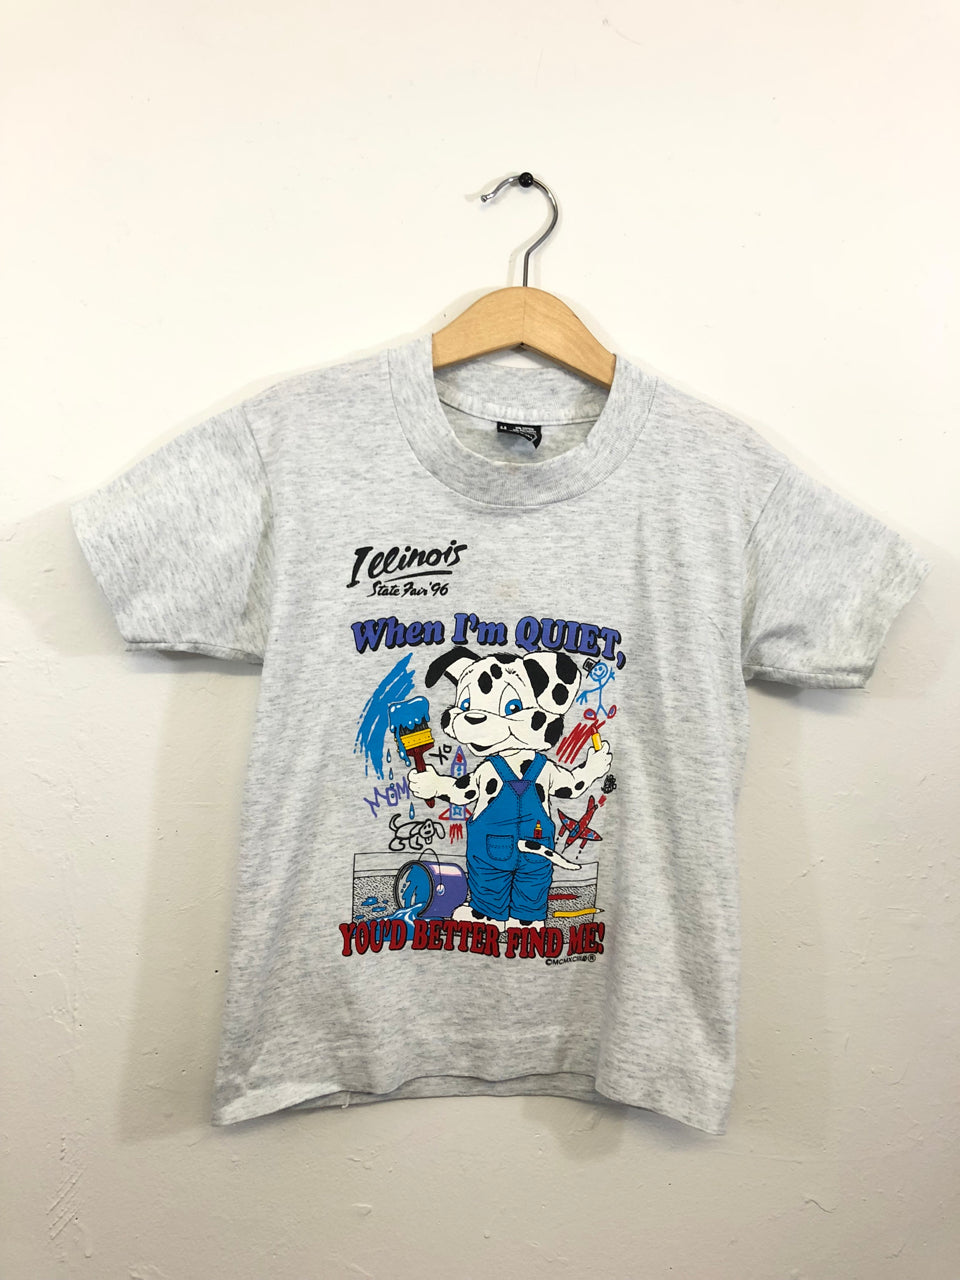 Kids' Illinois State Fair '96 T-Shirt